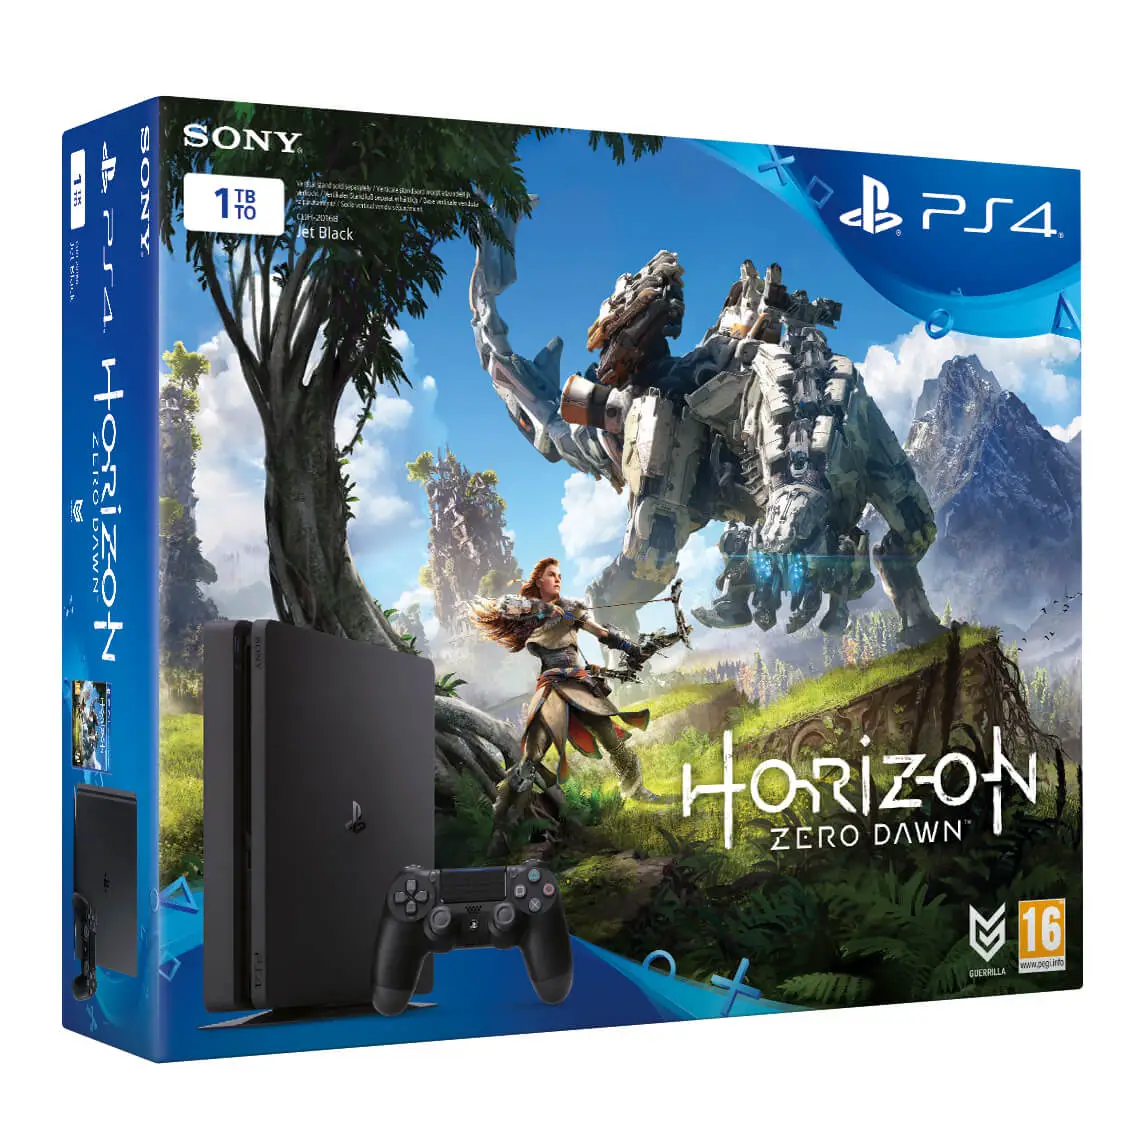 Horizon Zero Dawn 1TB PlayStation 4 Slim Bundle In Stores March 